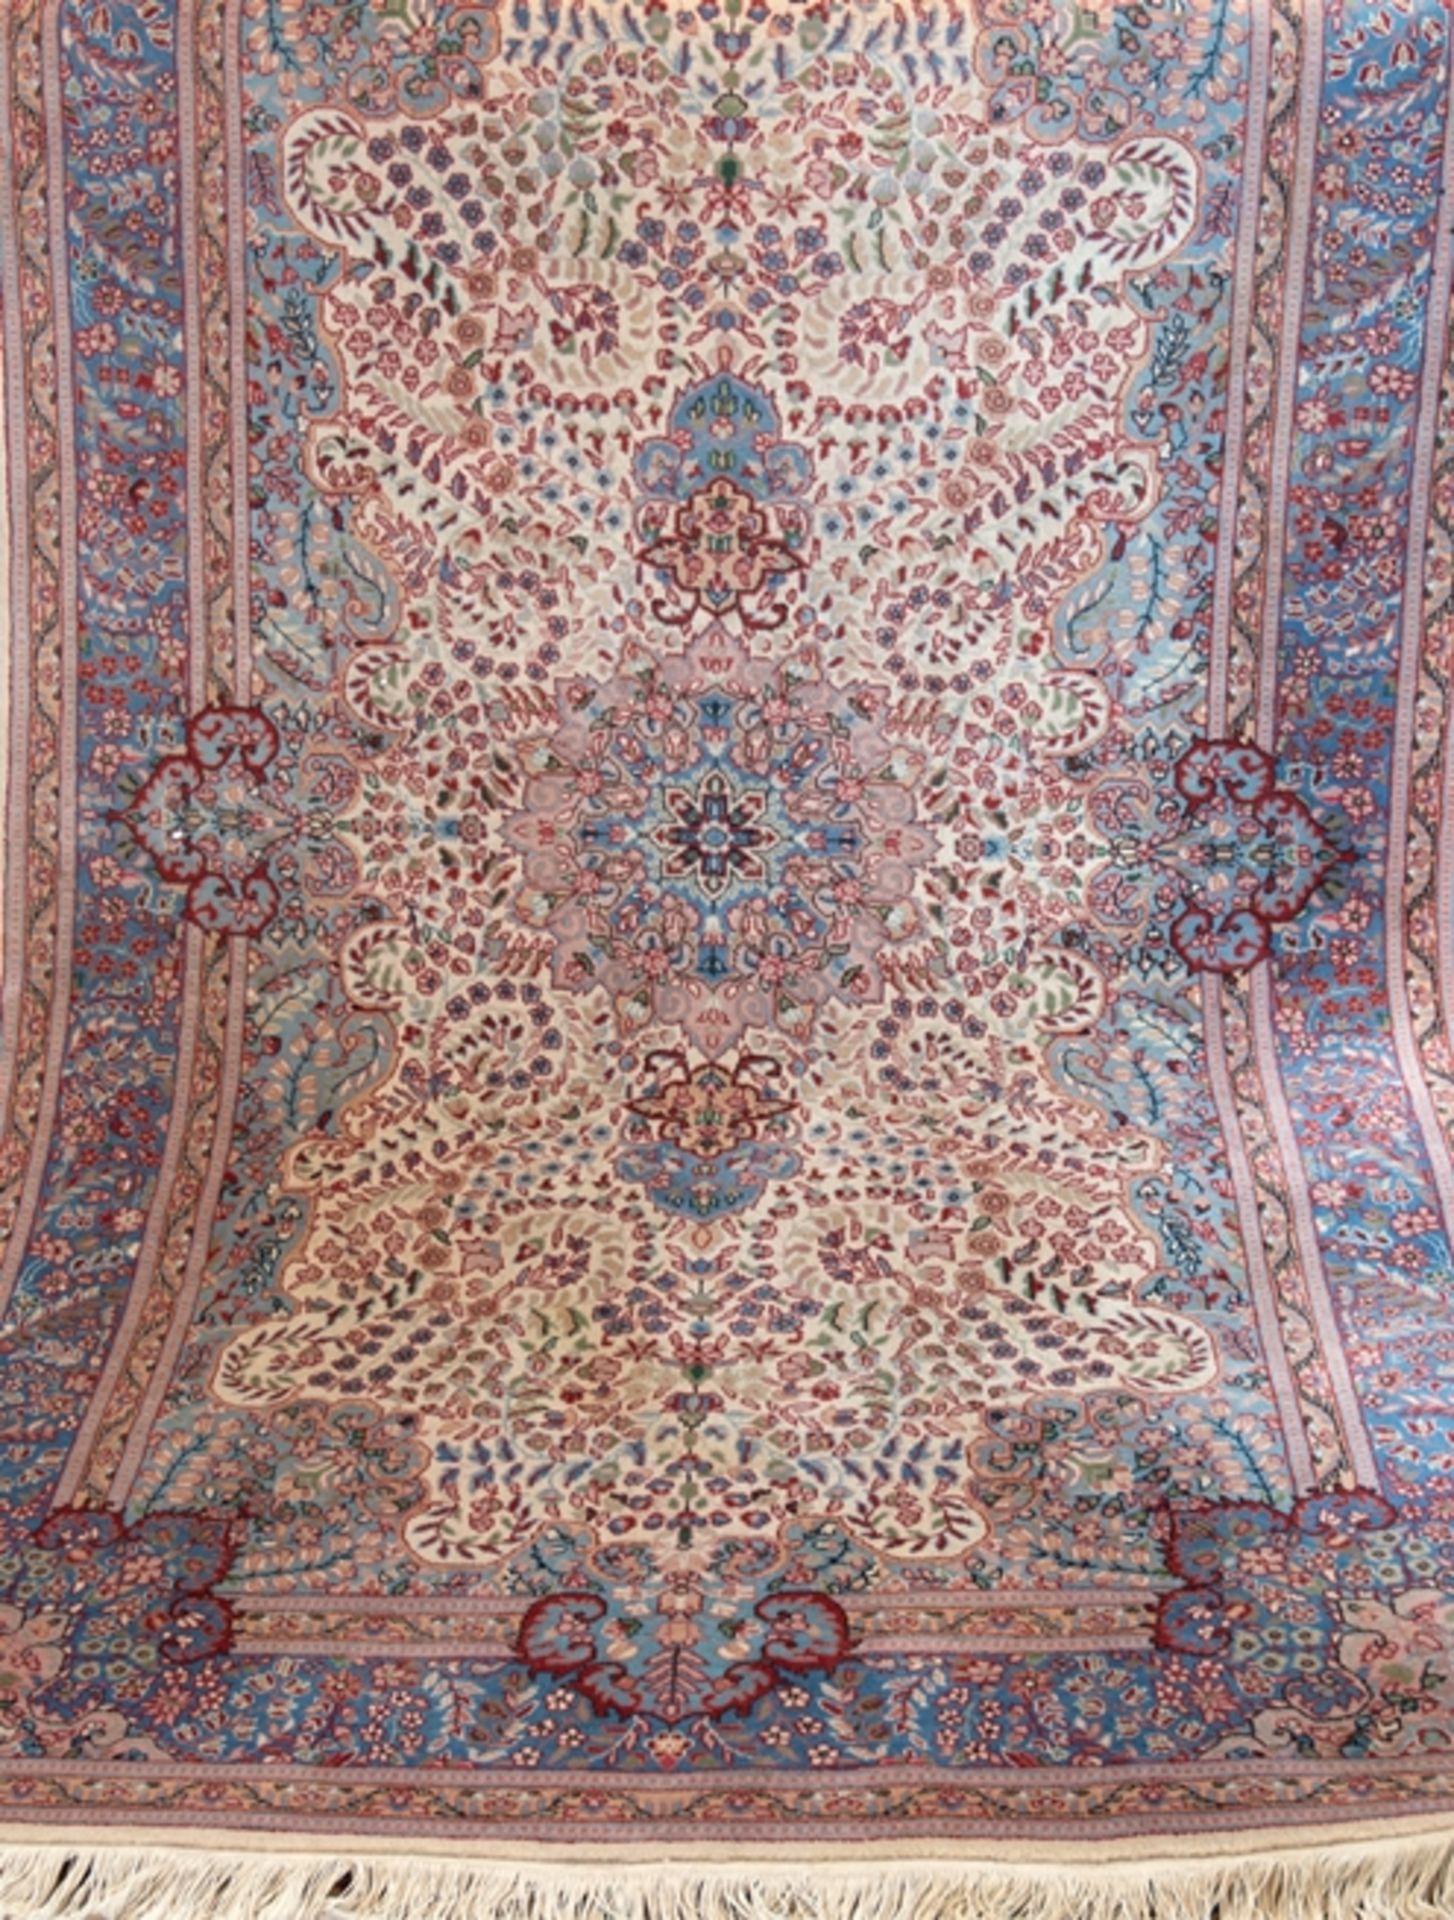 Keshan, beigegrundig mit hellblauem Rand, floral und ornamental gemustert, 244x152 cm